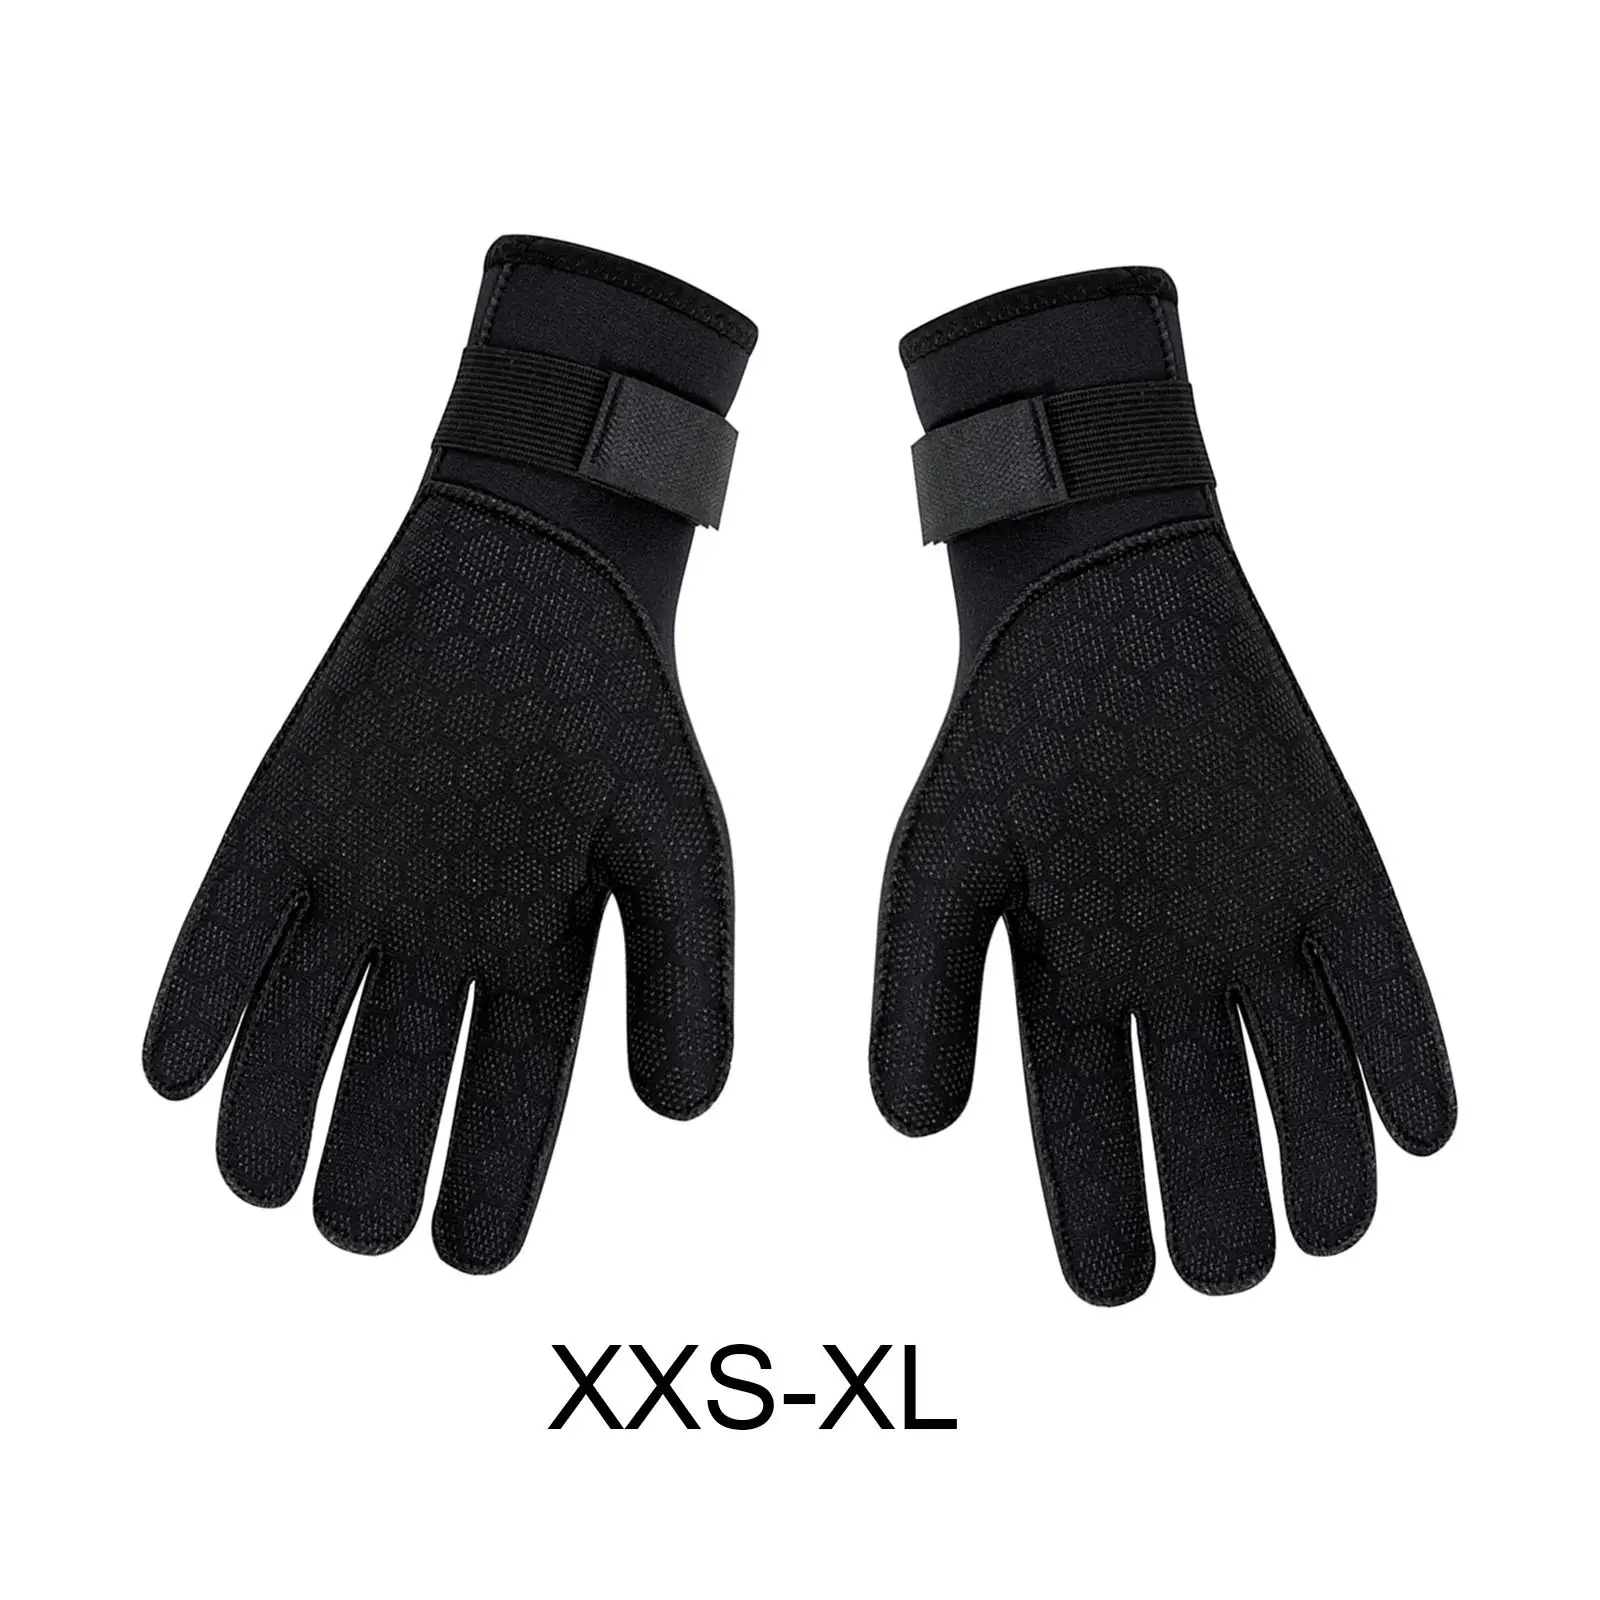 Diving Gloves Neoprene Gloves Wetsuit Gloves with Adjustable Strap Comfortable